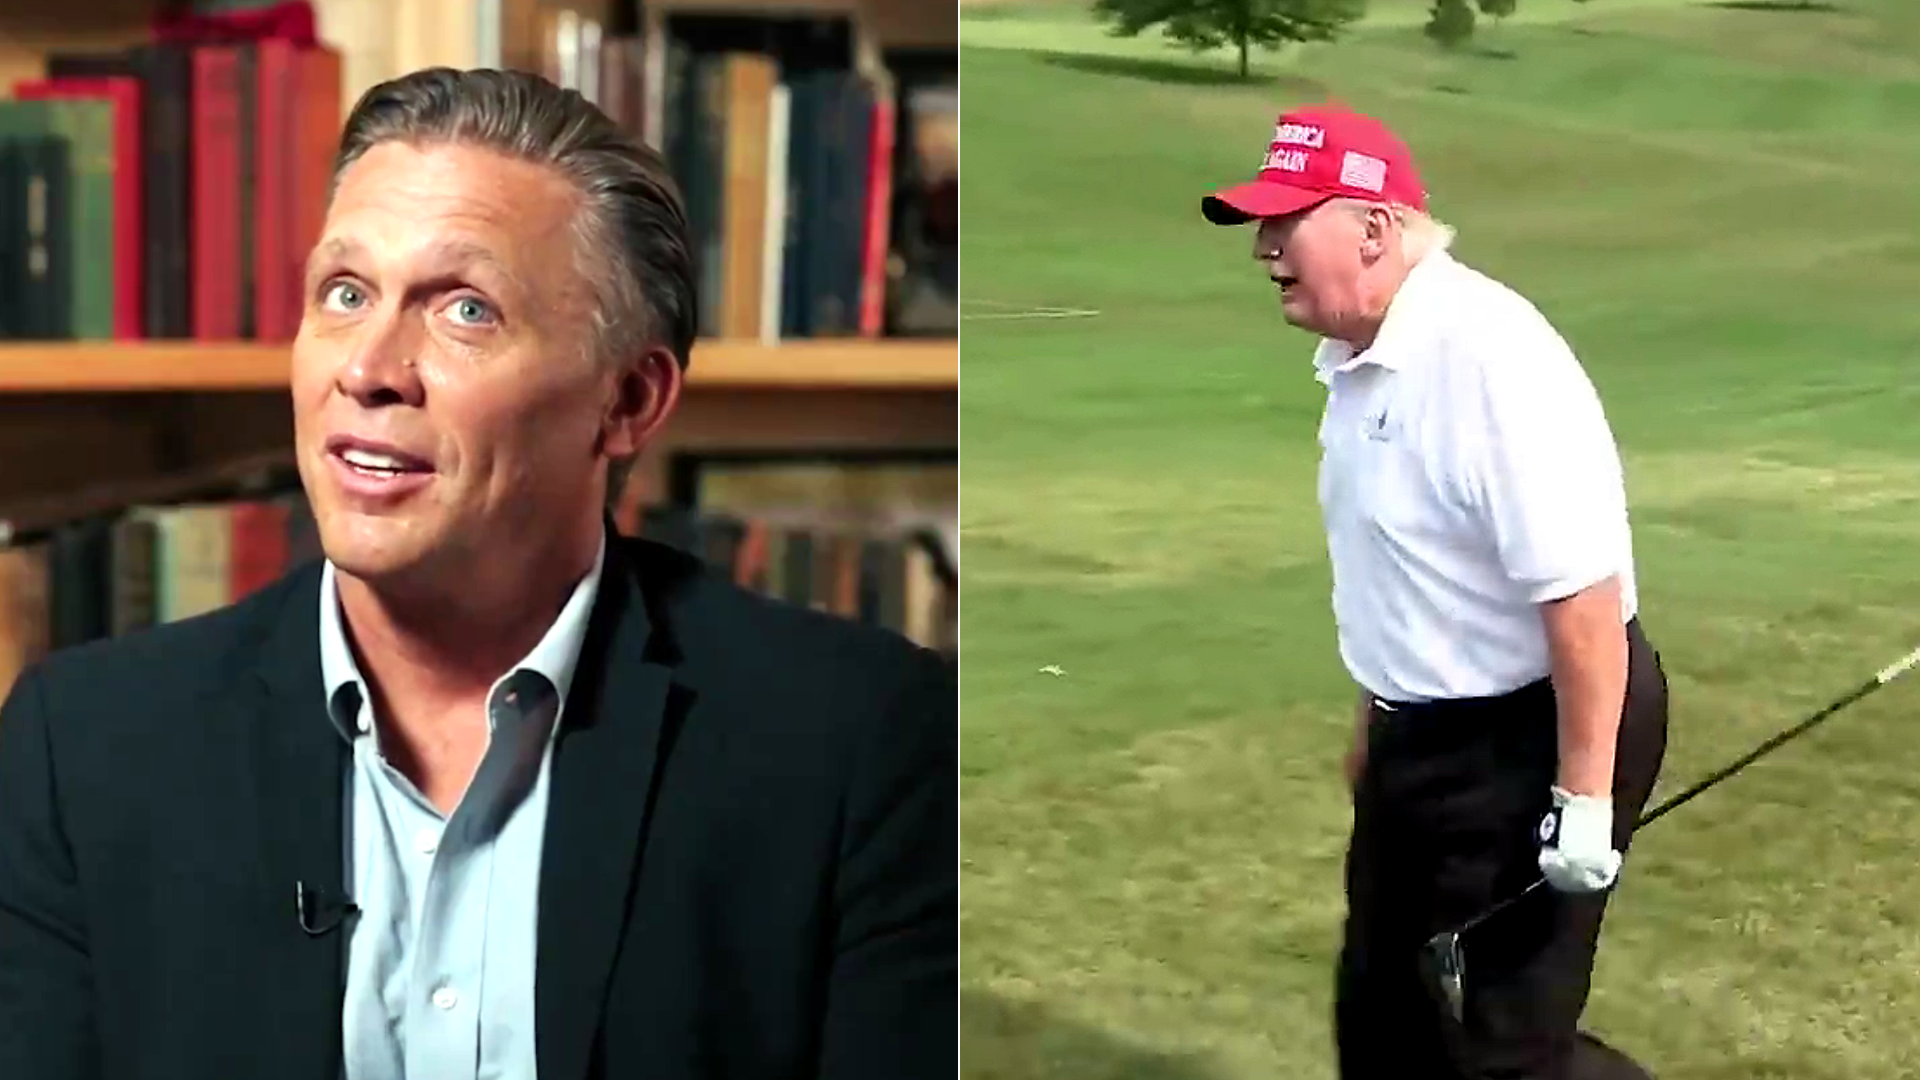 Hunter Biden Witness Devon Archer Tells All About Weird Time He Met Donald Trump While Playing Golf (mediaite.com)